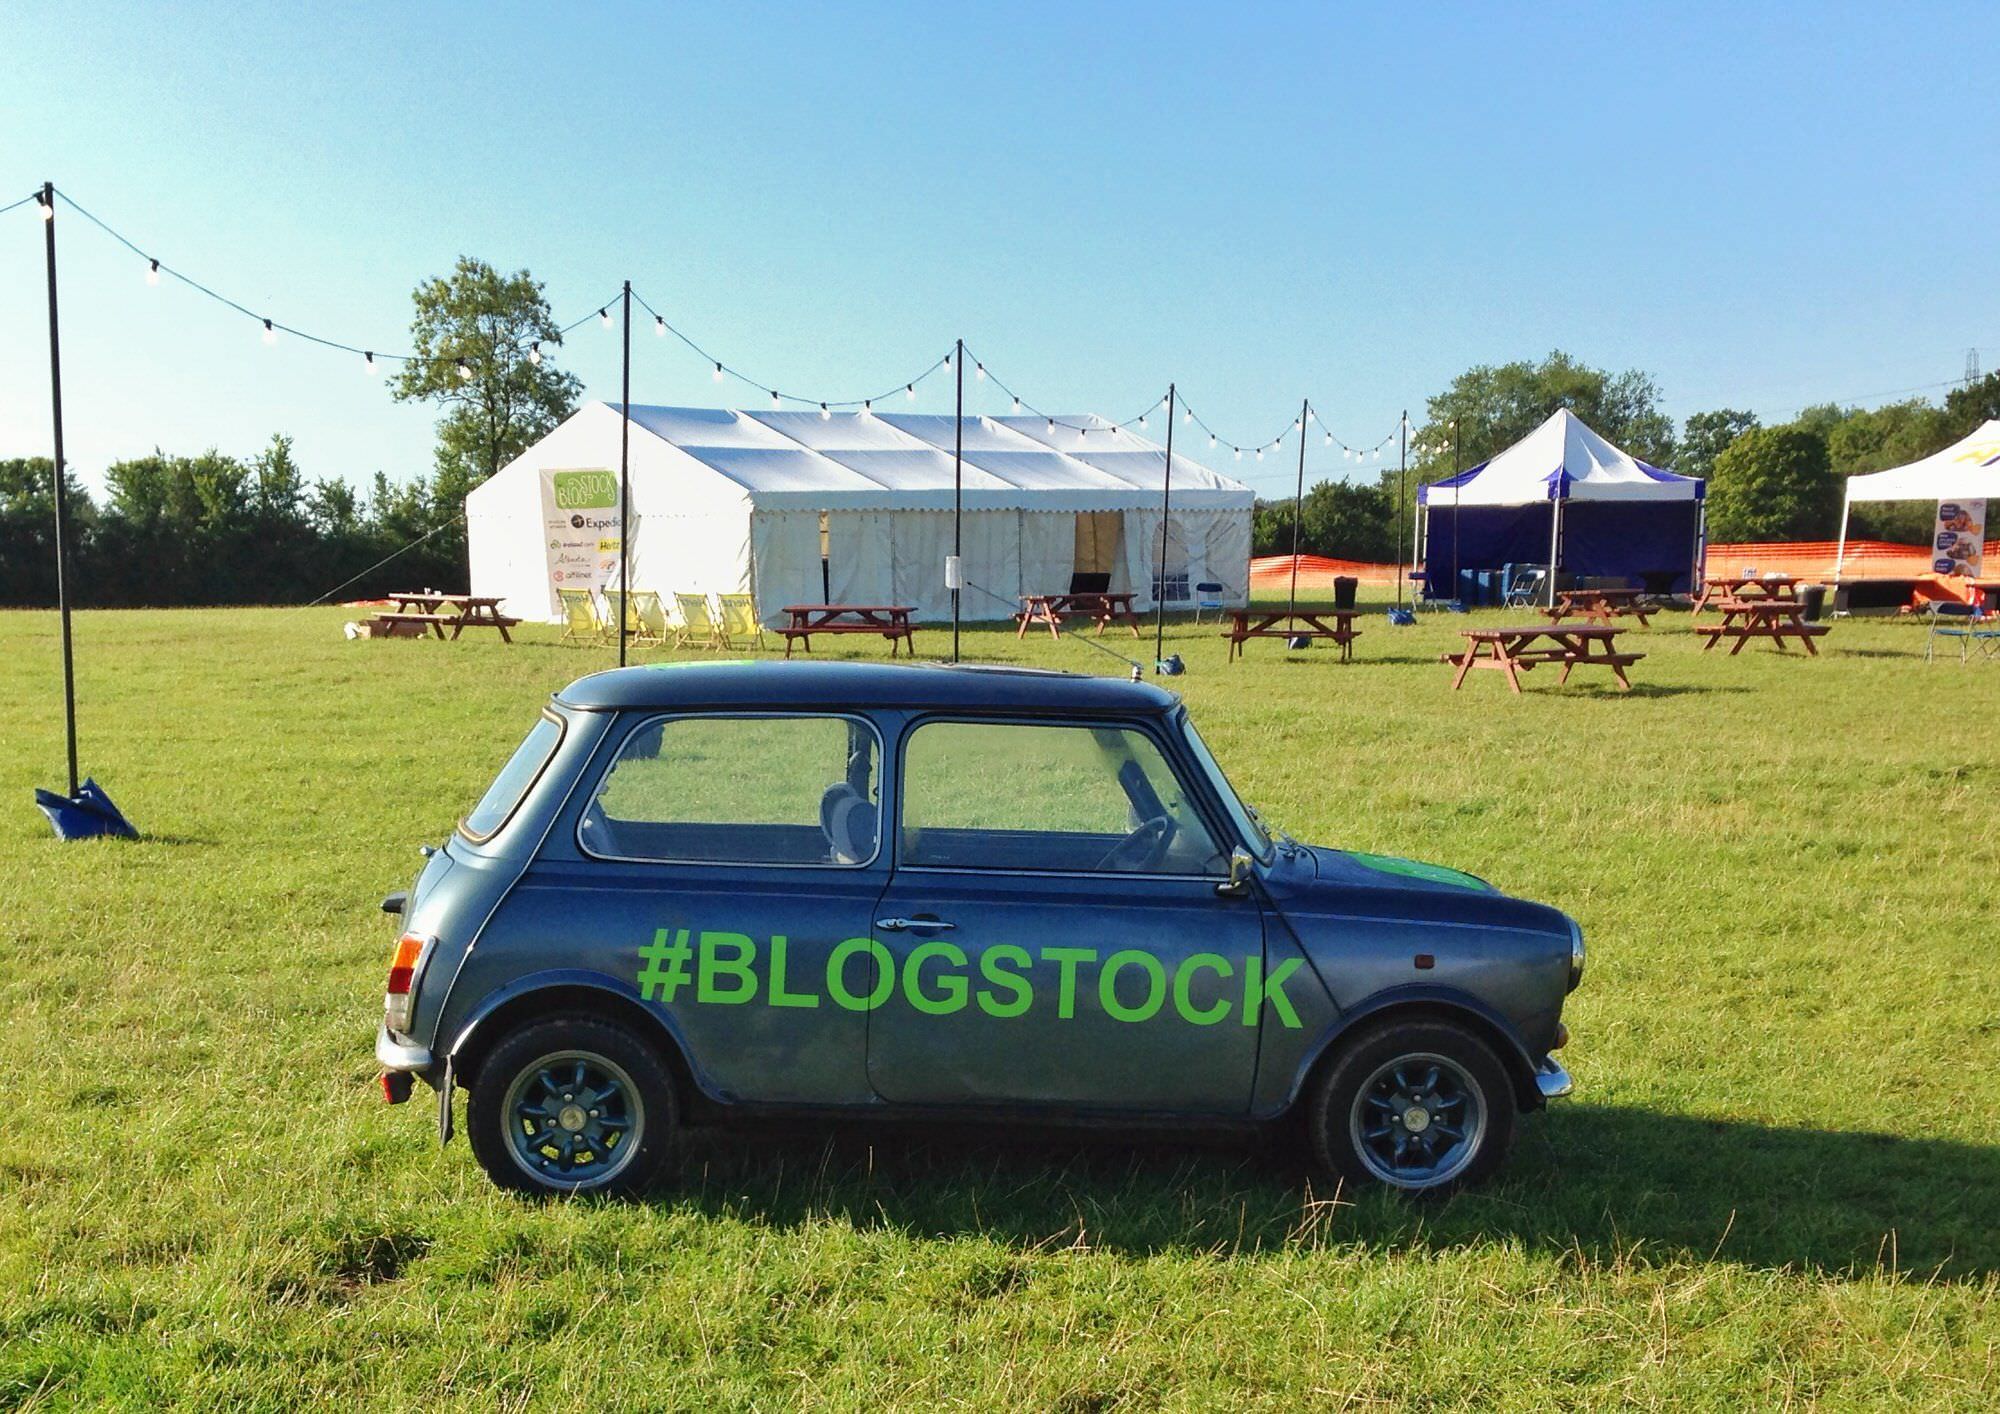 Blogstock festival near London UK